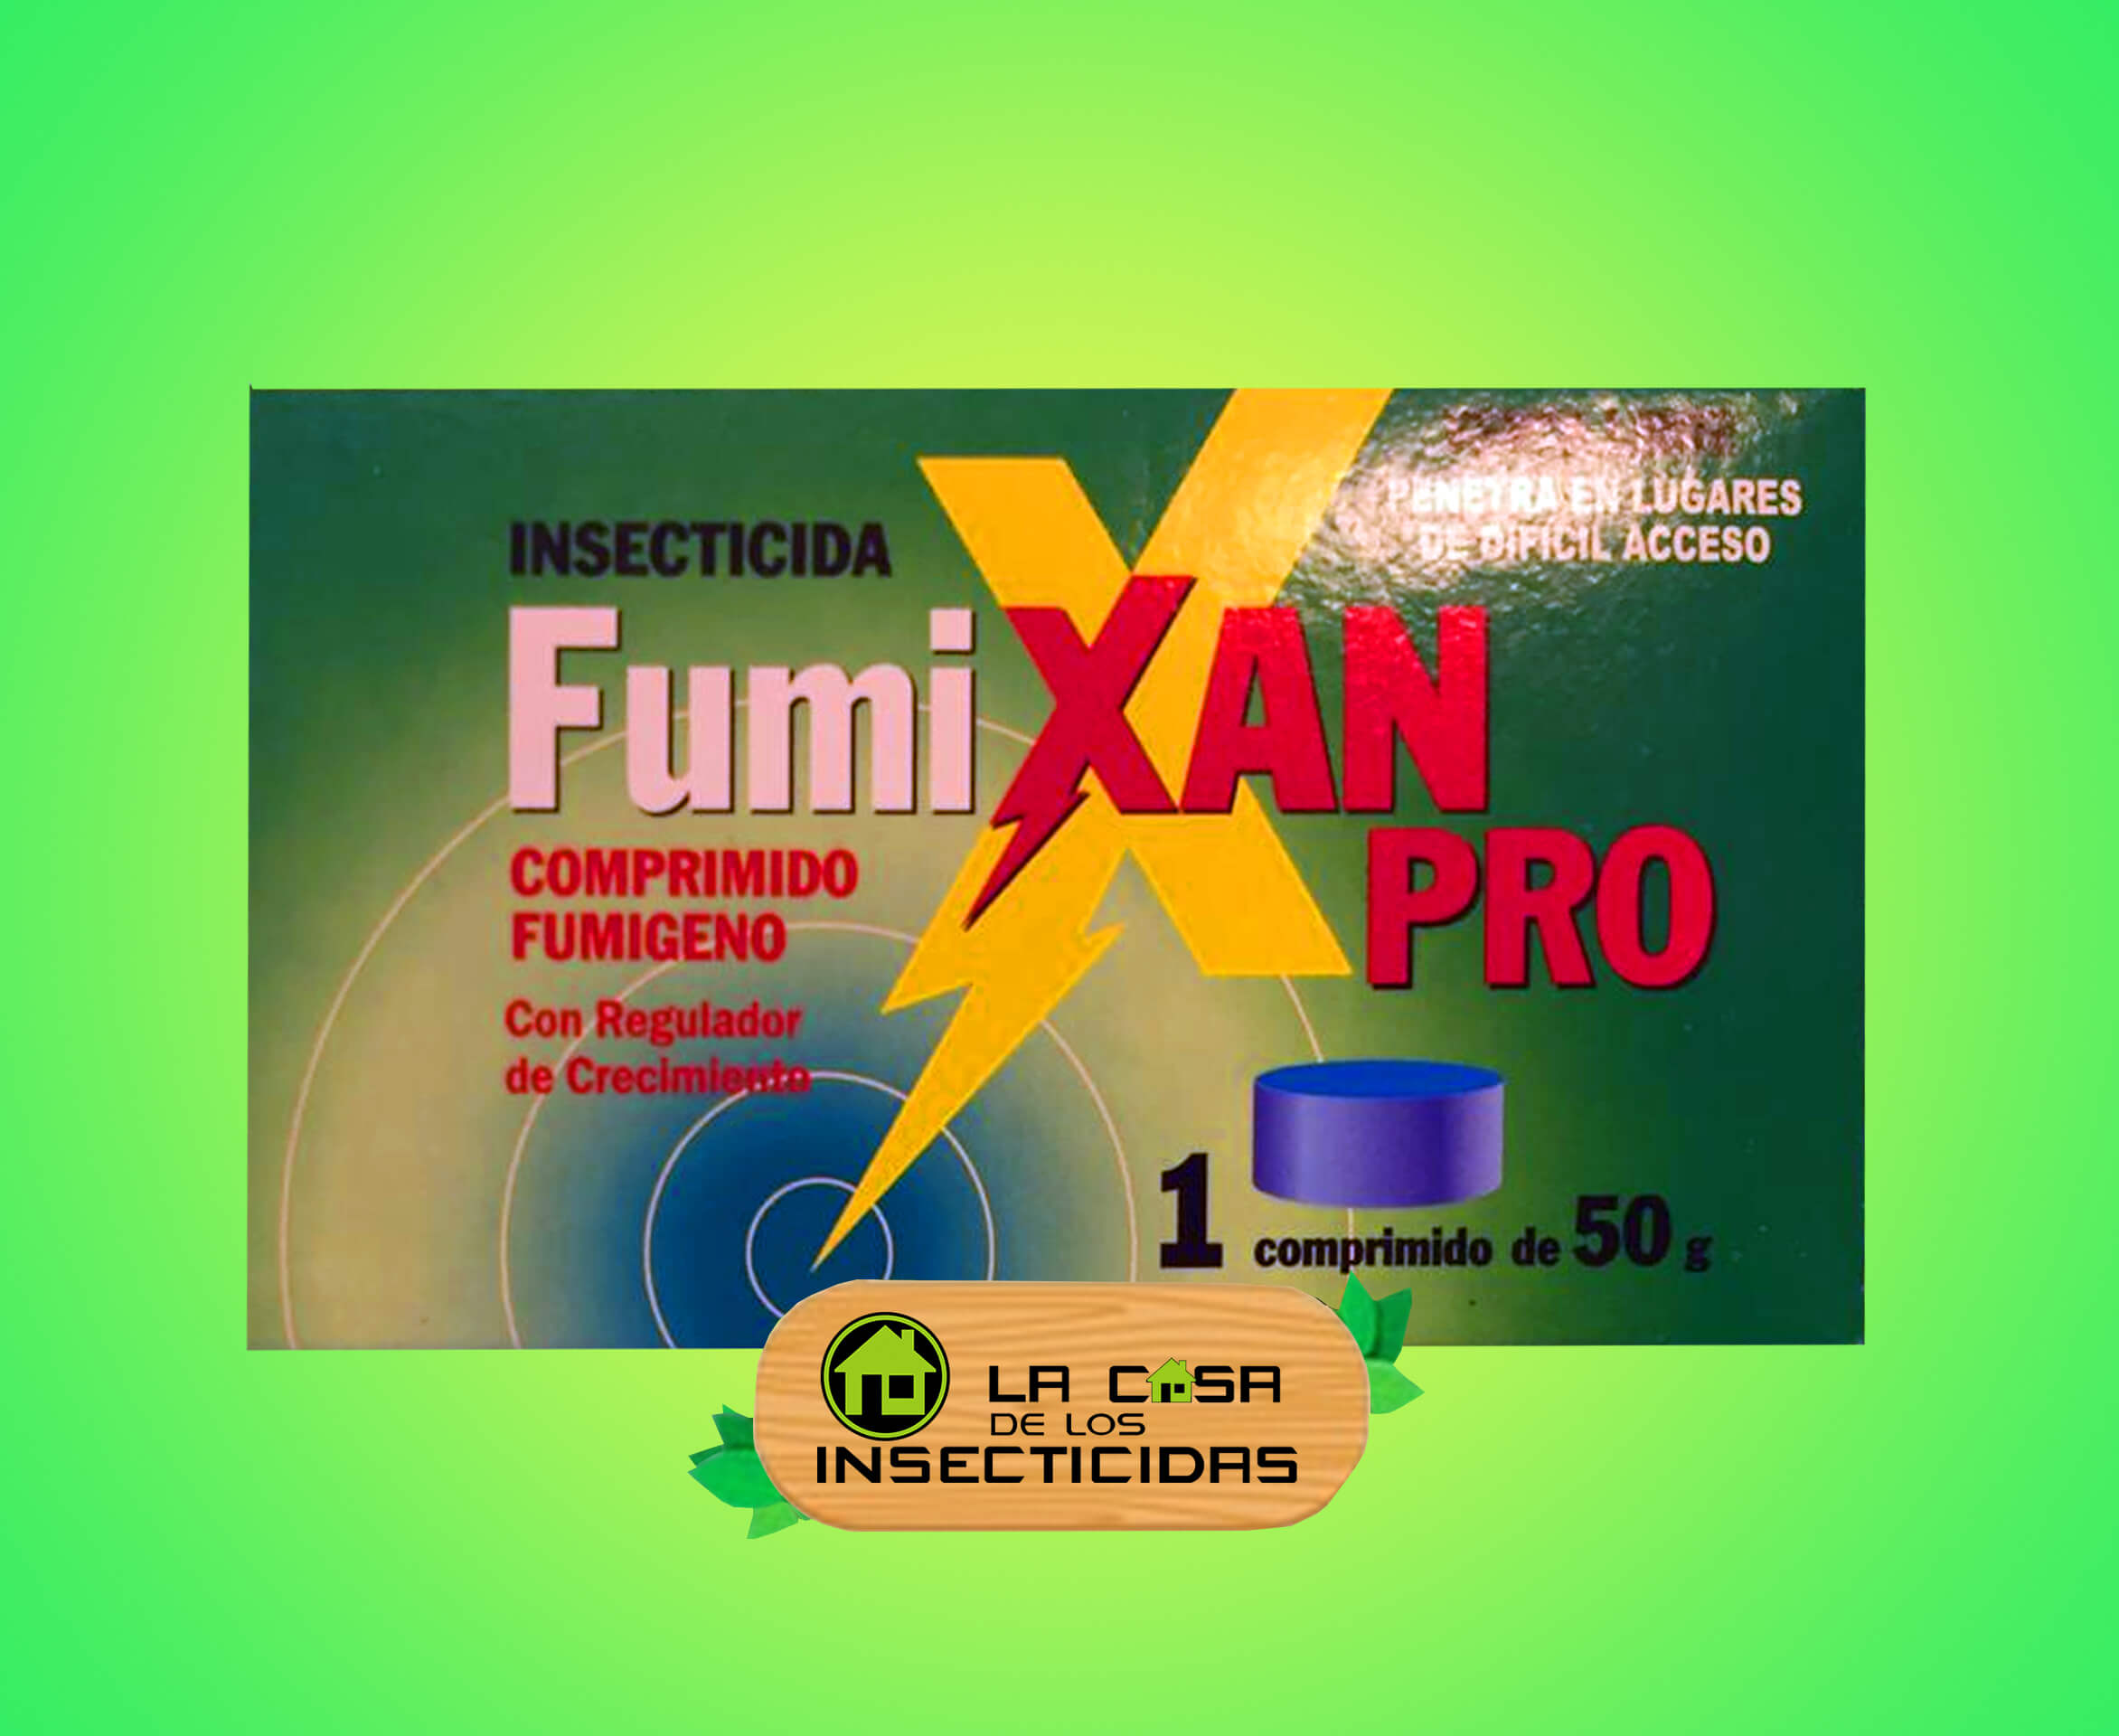 Fumixan Pro comprimido fumigeno insecticida